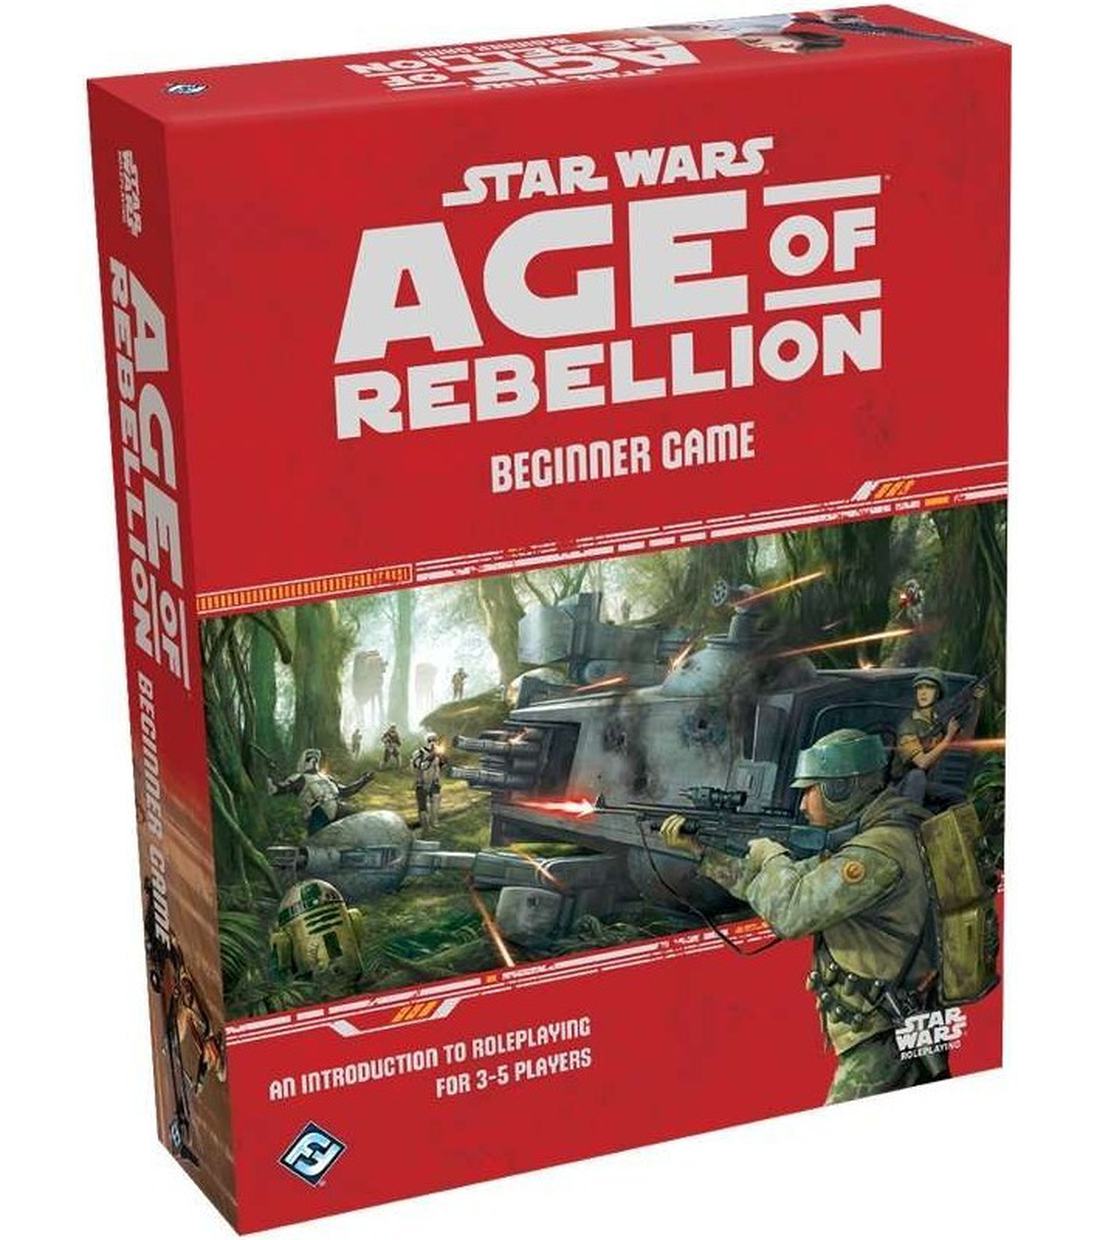 Star Wars Age of the Rebellion Beginner Game